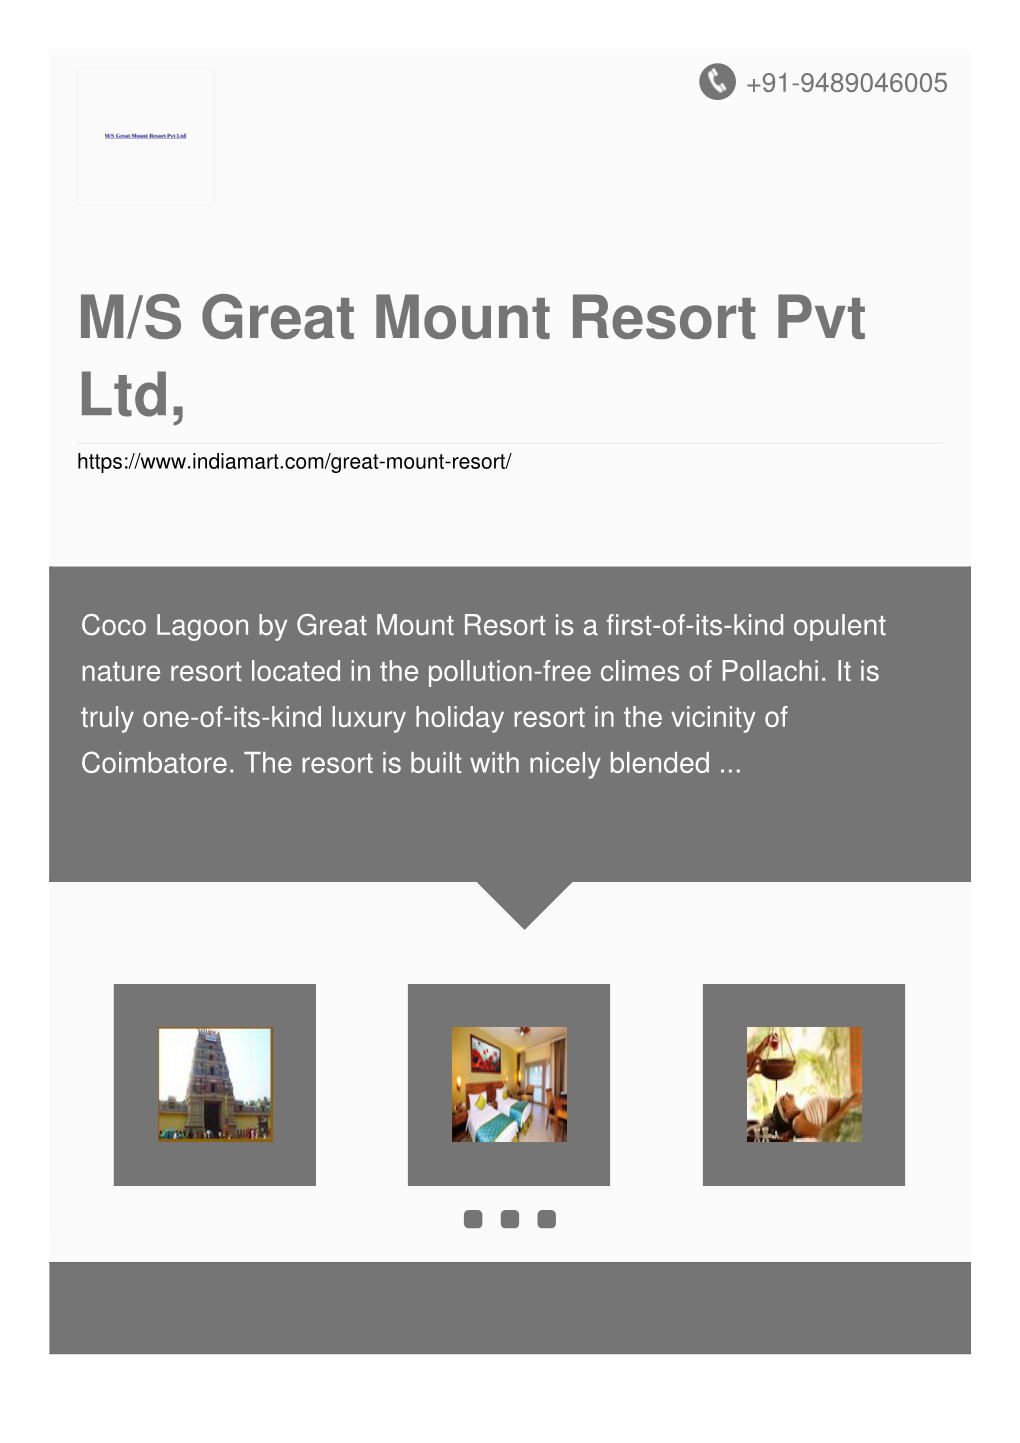 M/S Great Mount Resort Pvt Ltd